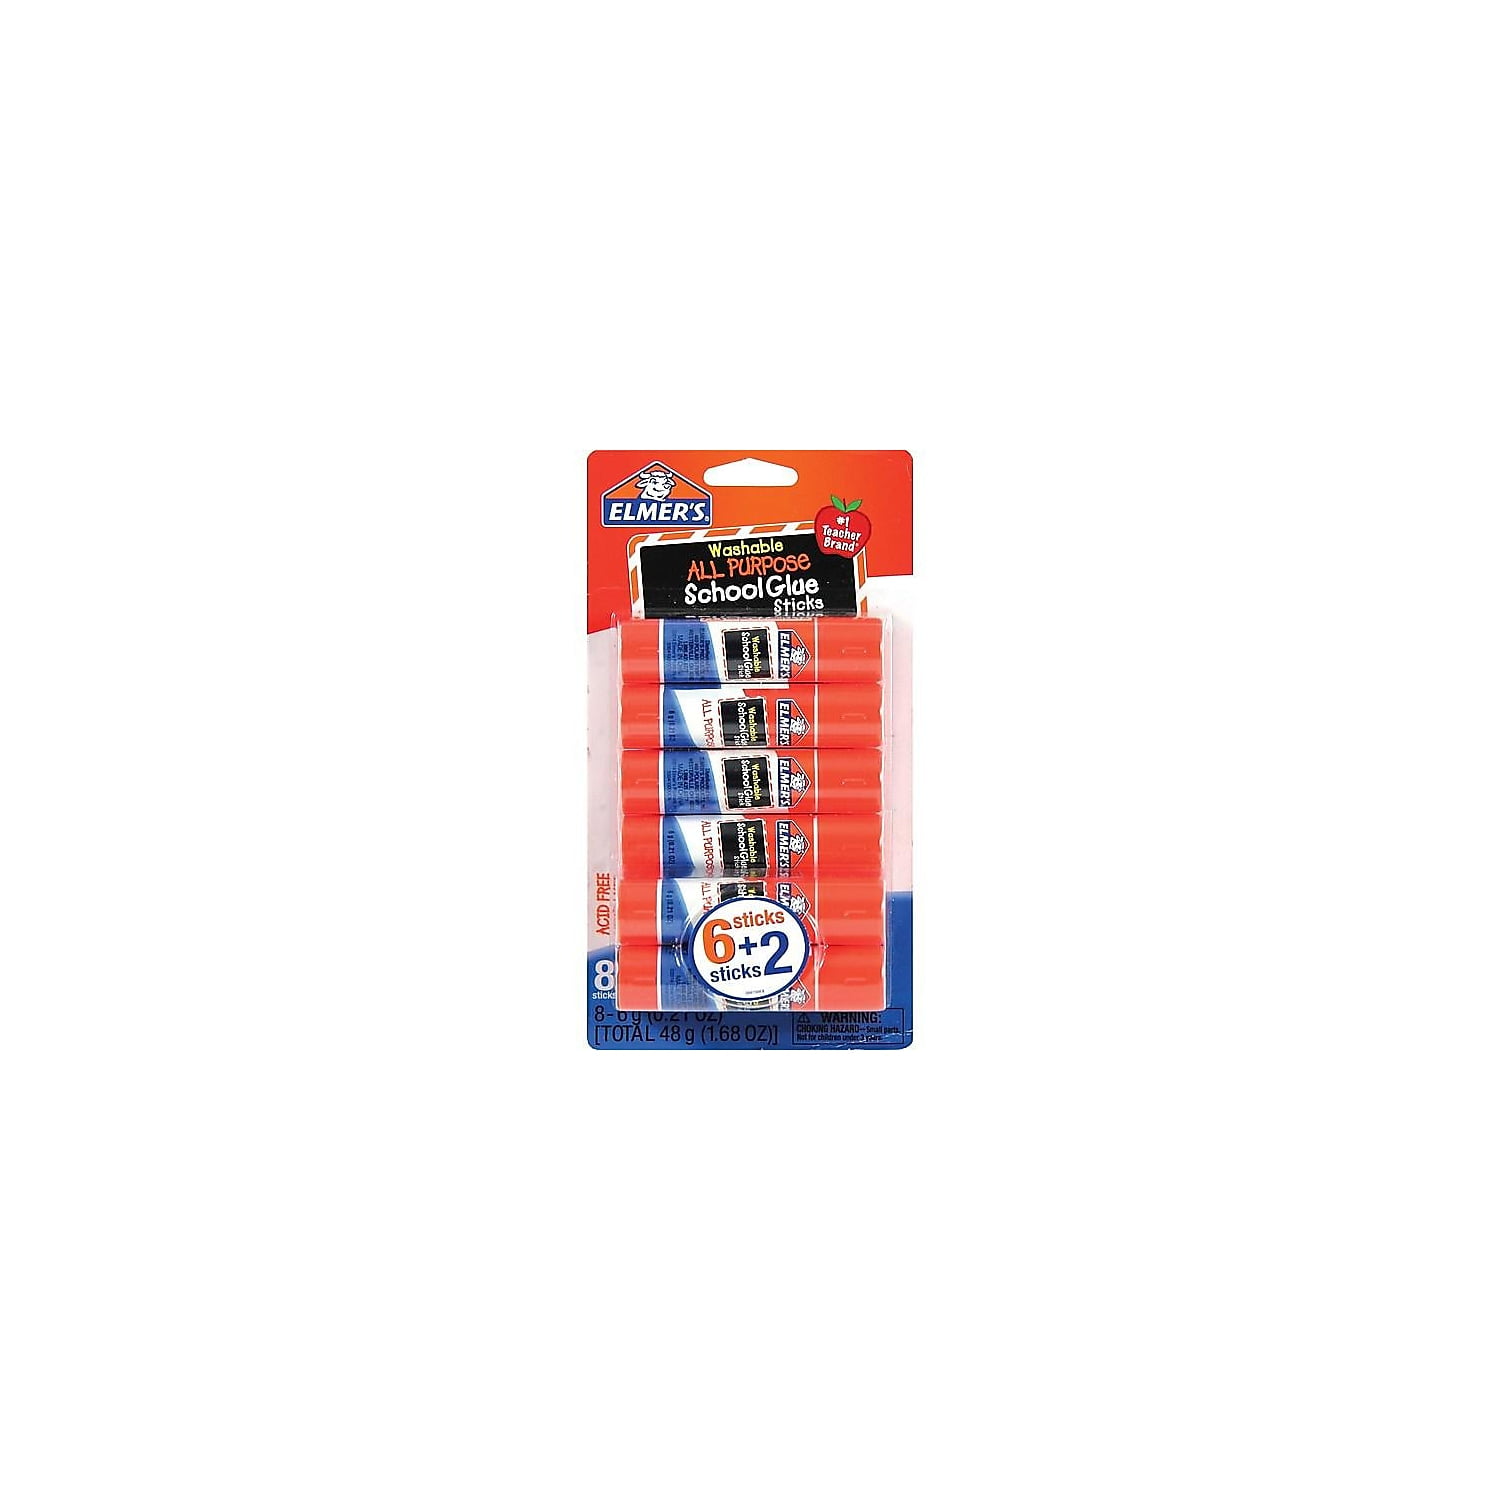 Elmer's Washable School Glue Sticks, All Purpose, 4-pack